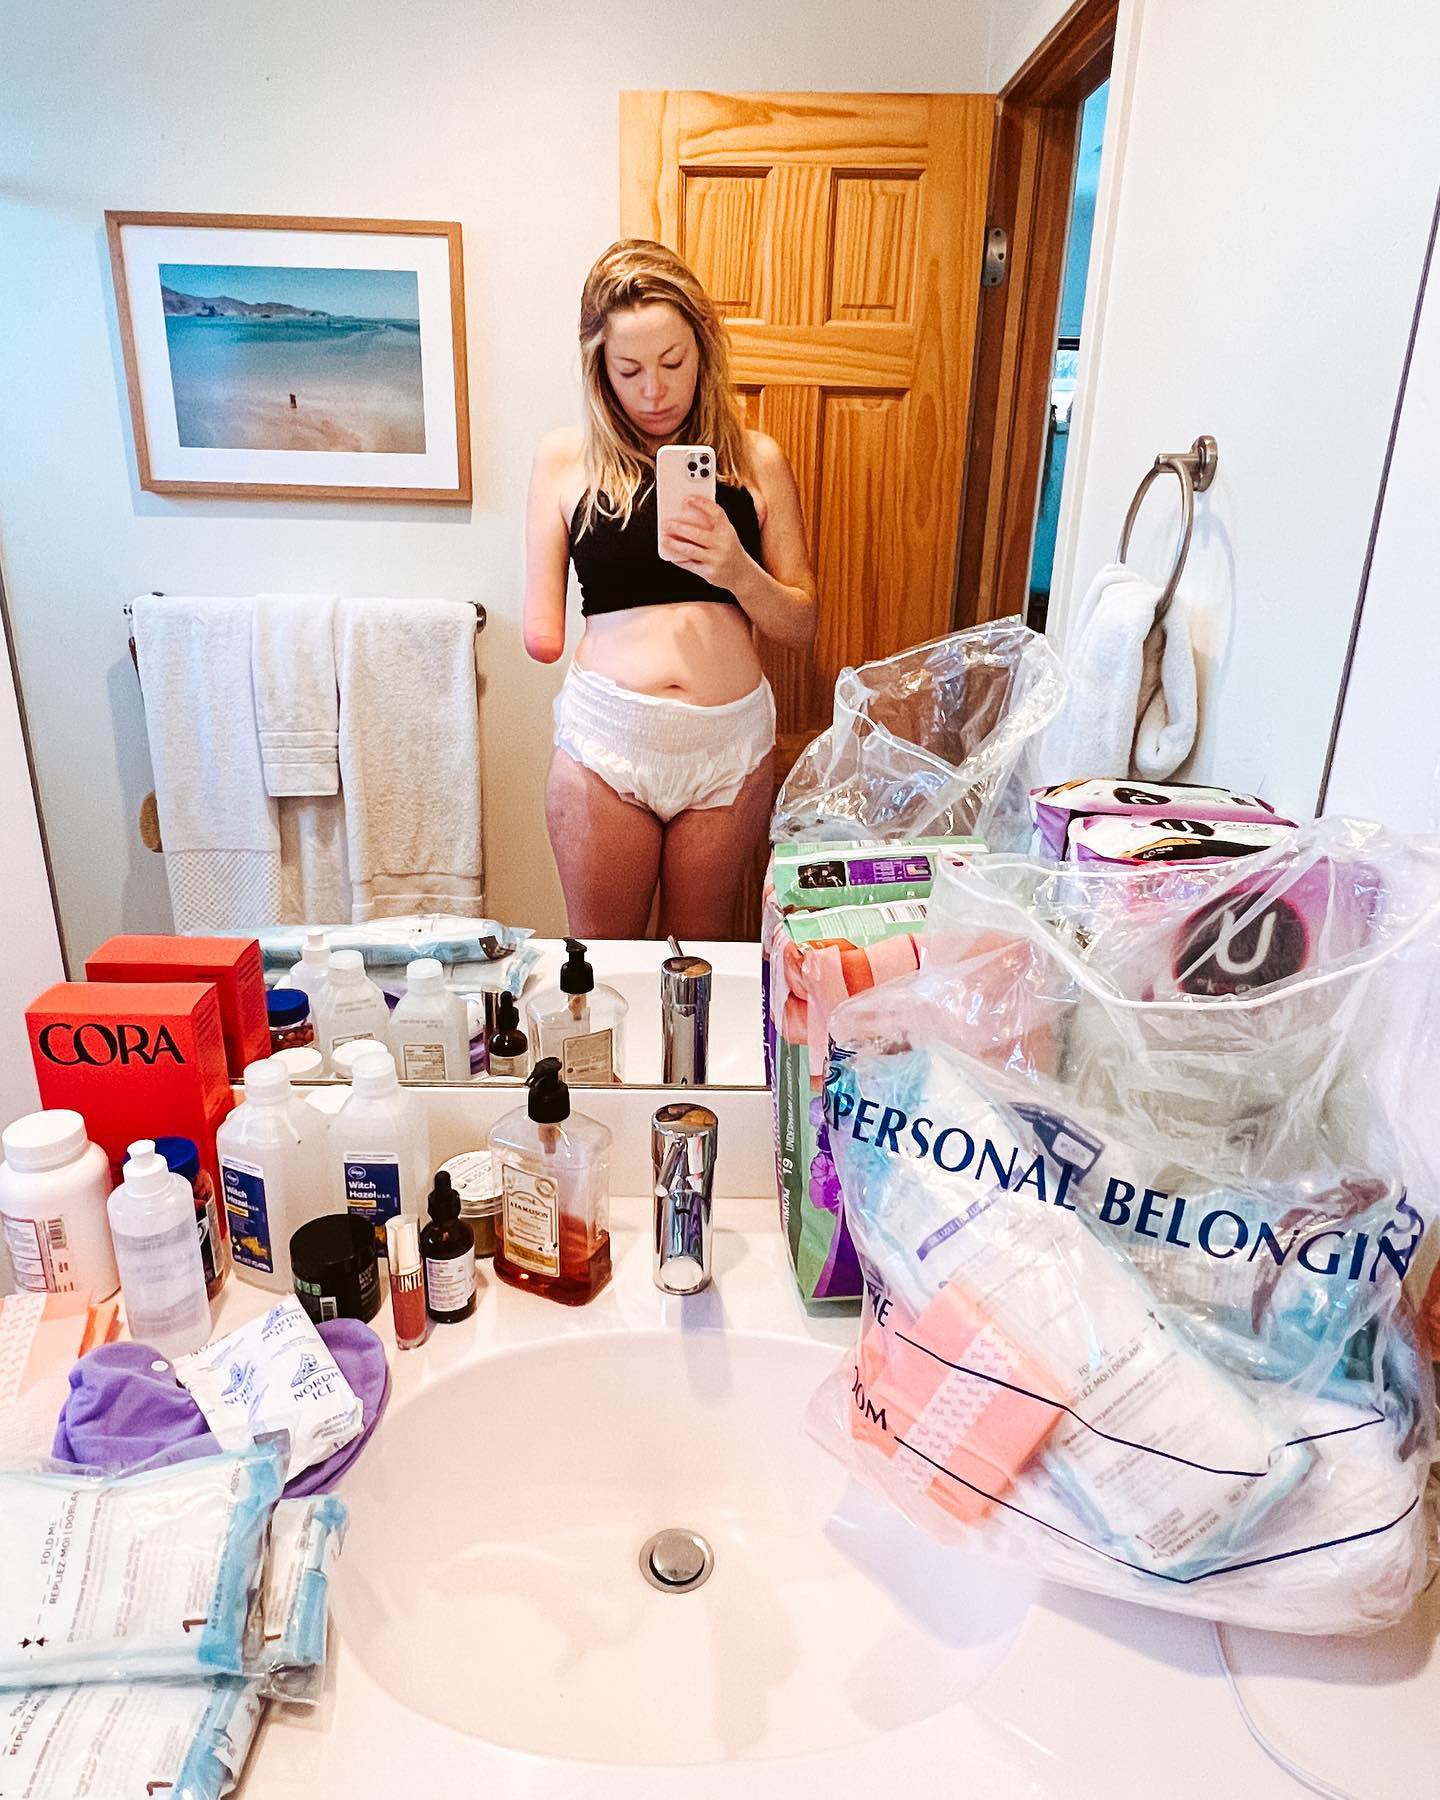 Sarah Herron: Postpartum Journey Amid Pregnancy Loss Is 'Haunting Reminder'